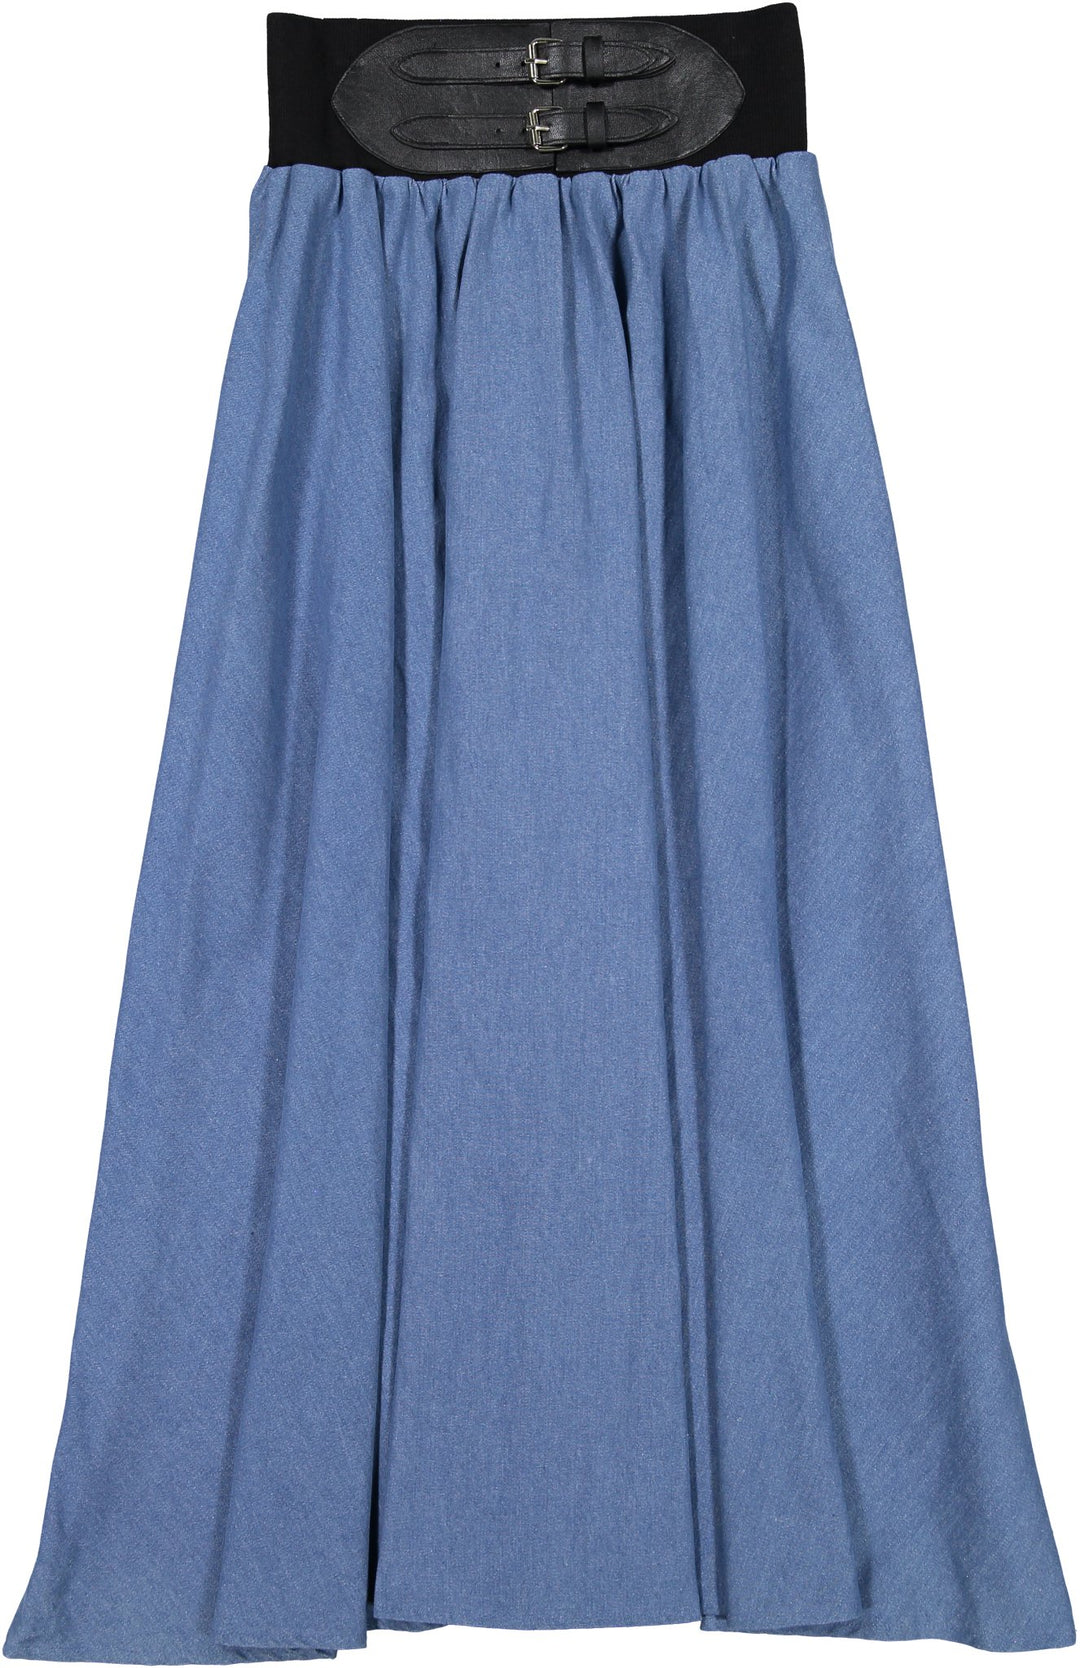 Buckled Maxi Skirt blue - Denim - Posh New York